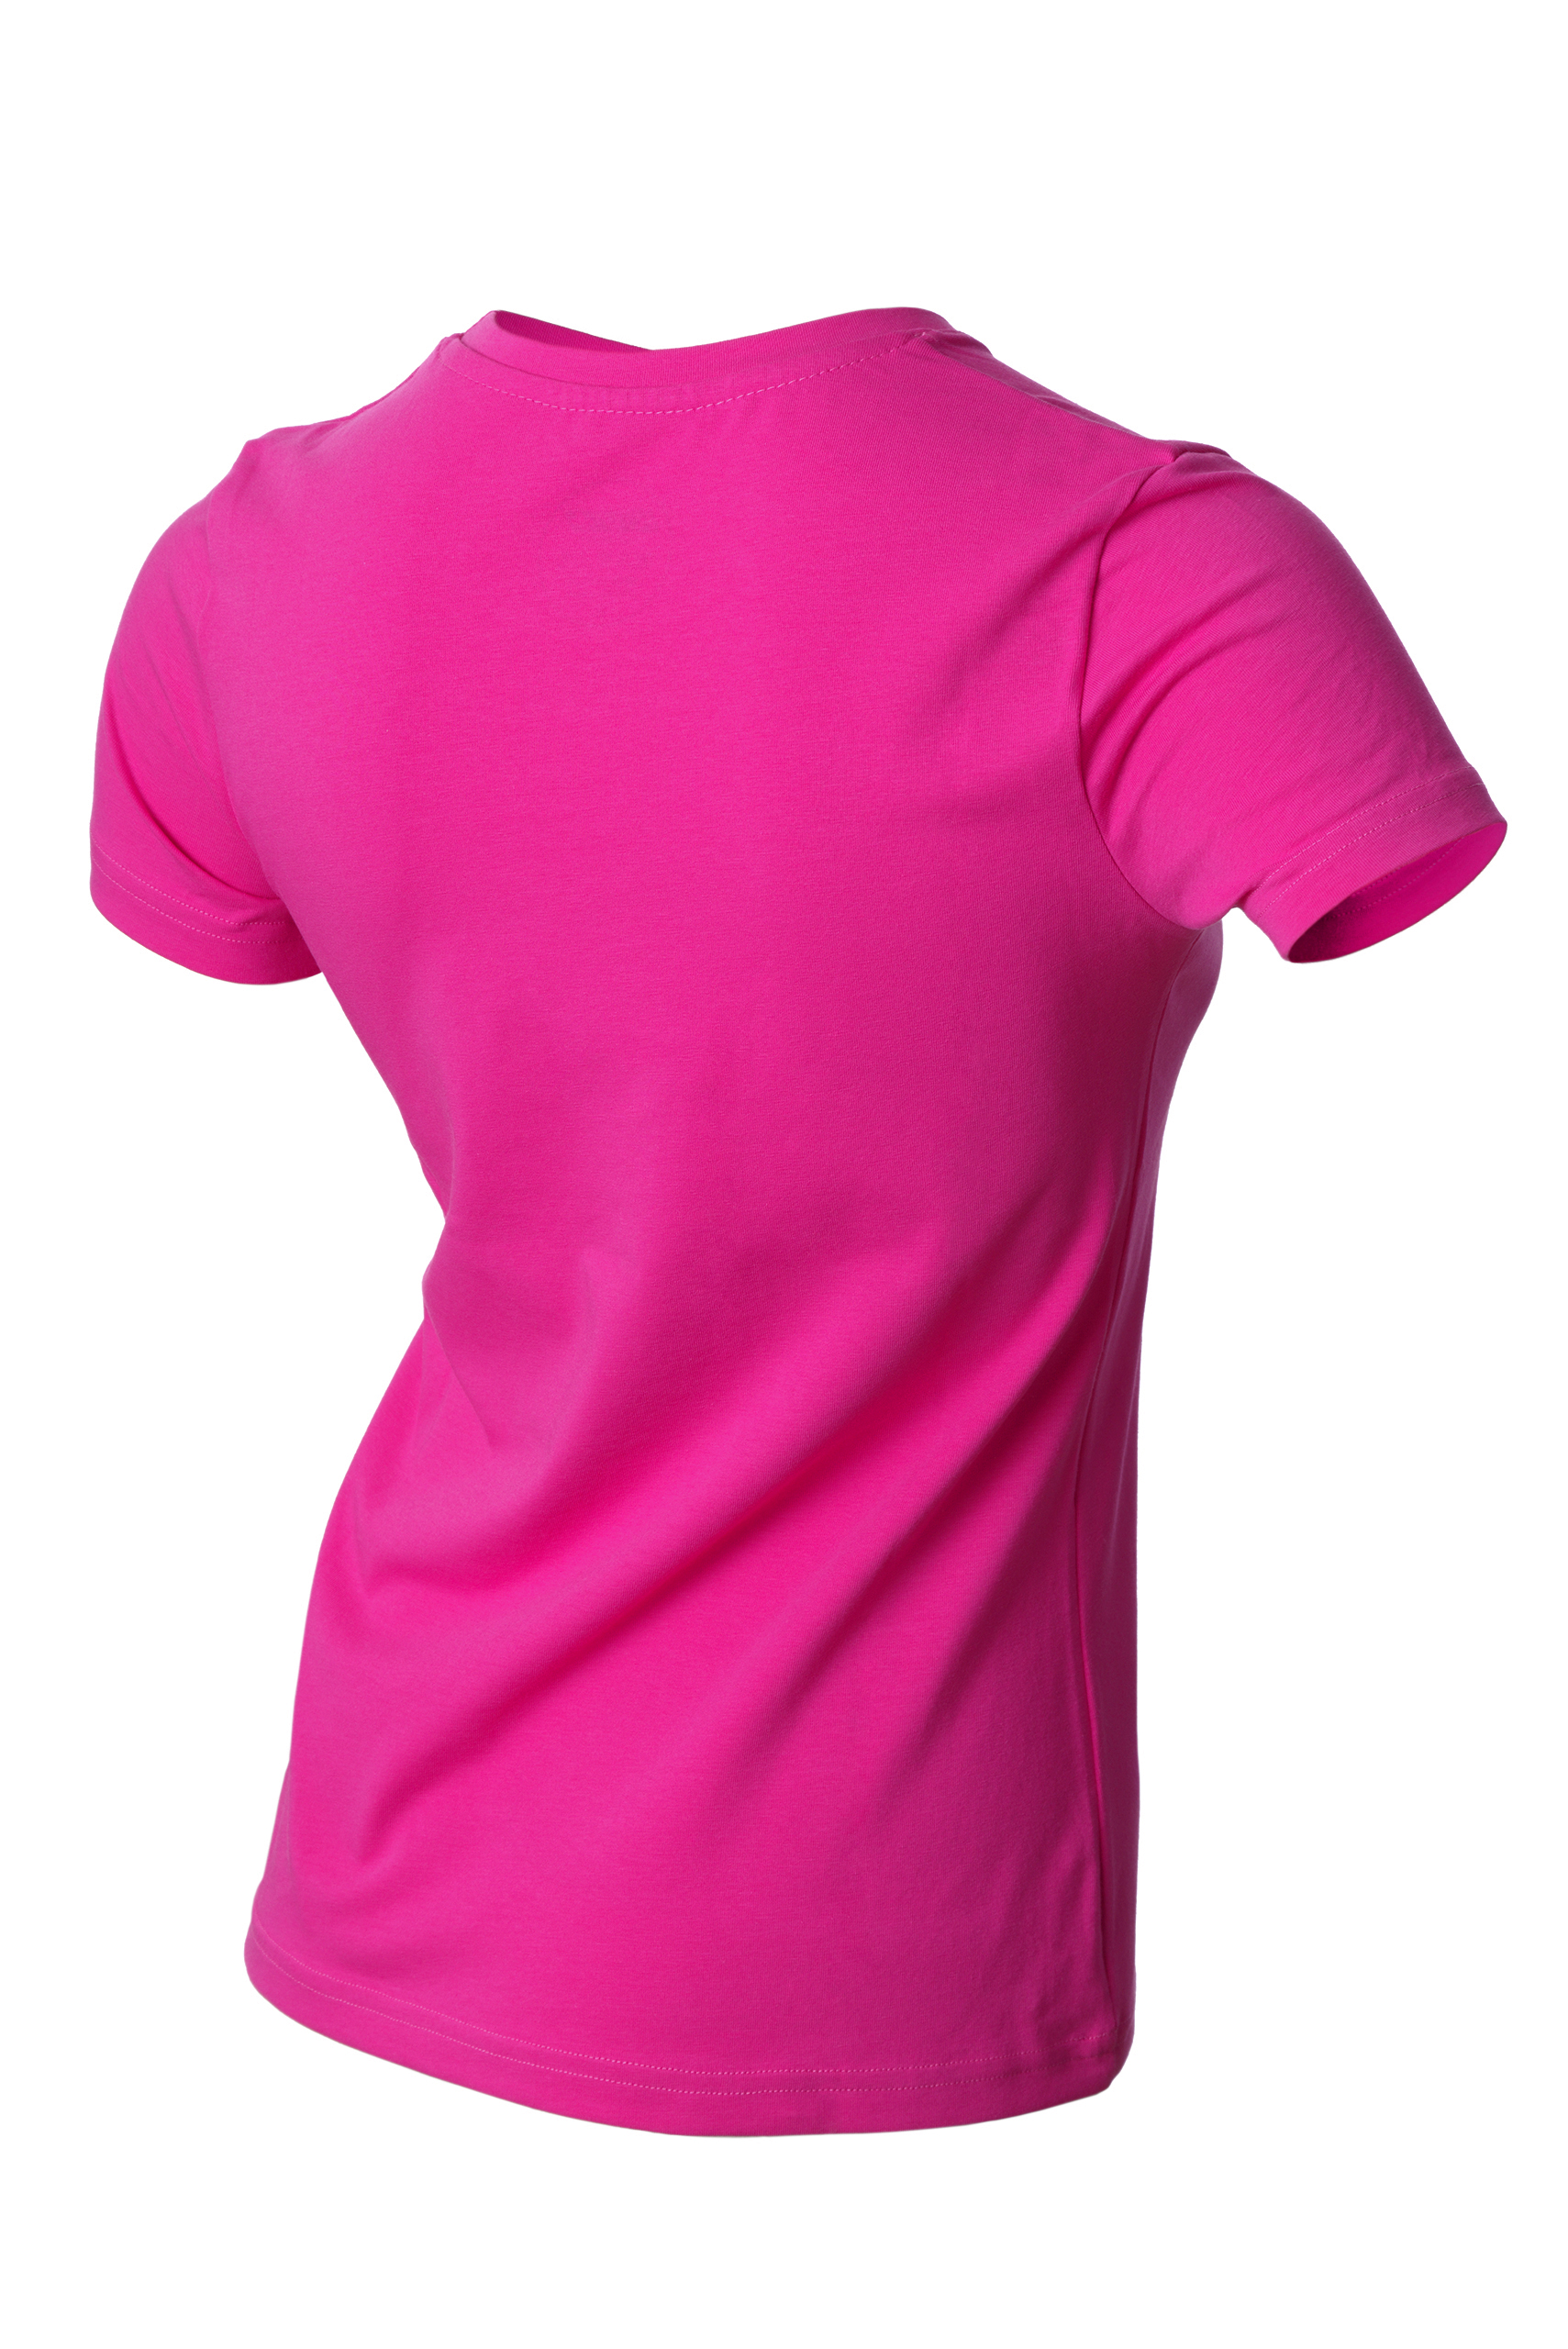 ACTIVE T-SHIRT woman NORDIC WALKING (Pink)